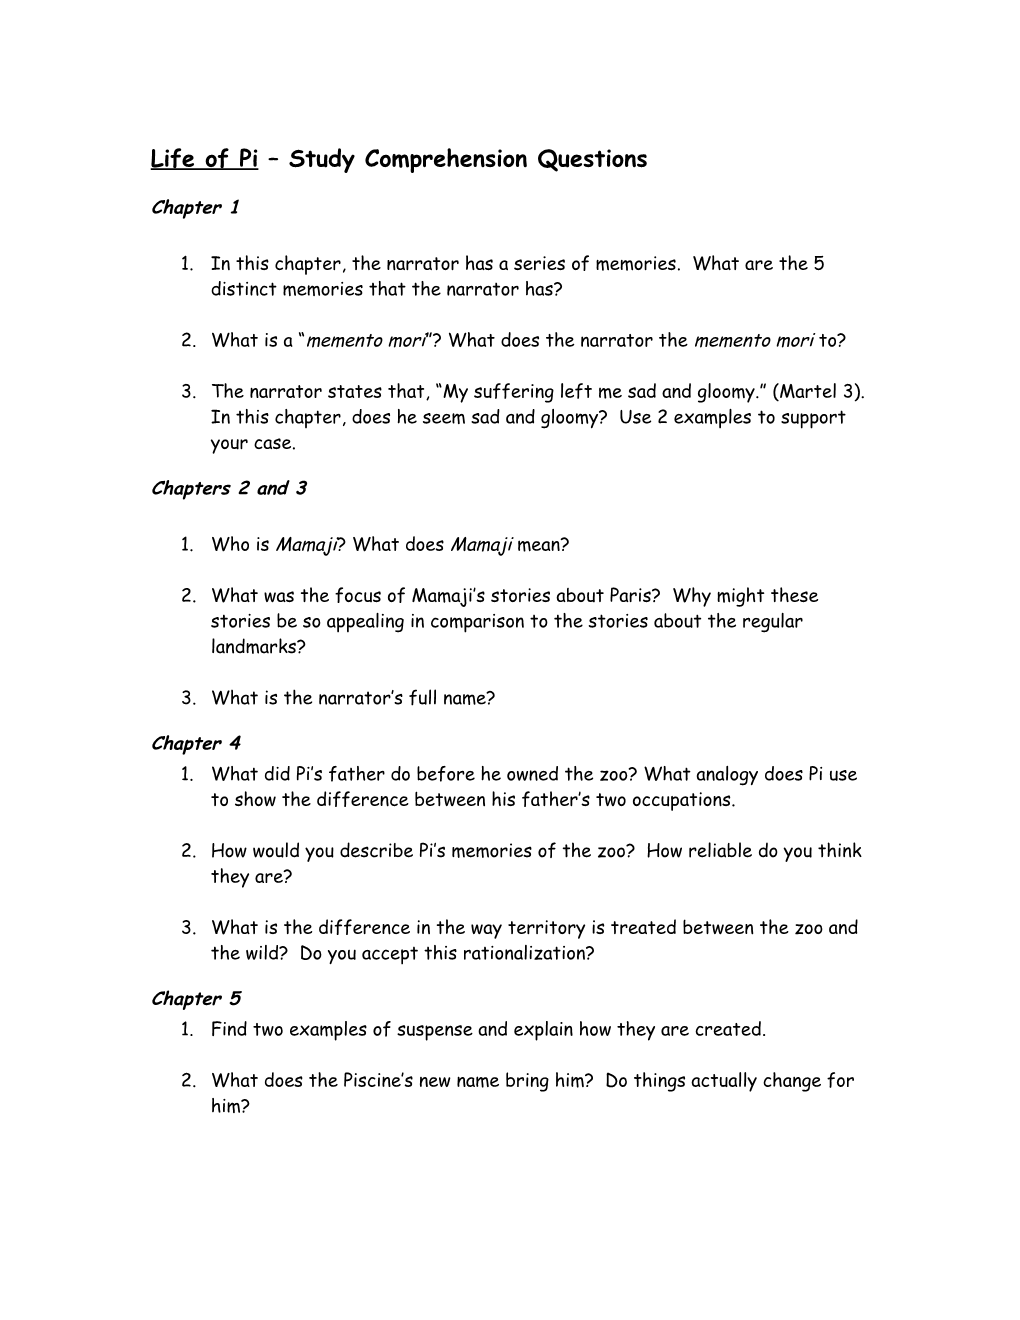 Life of Pi Study Comprehension Questions